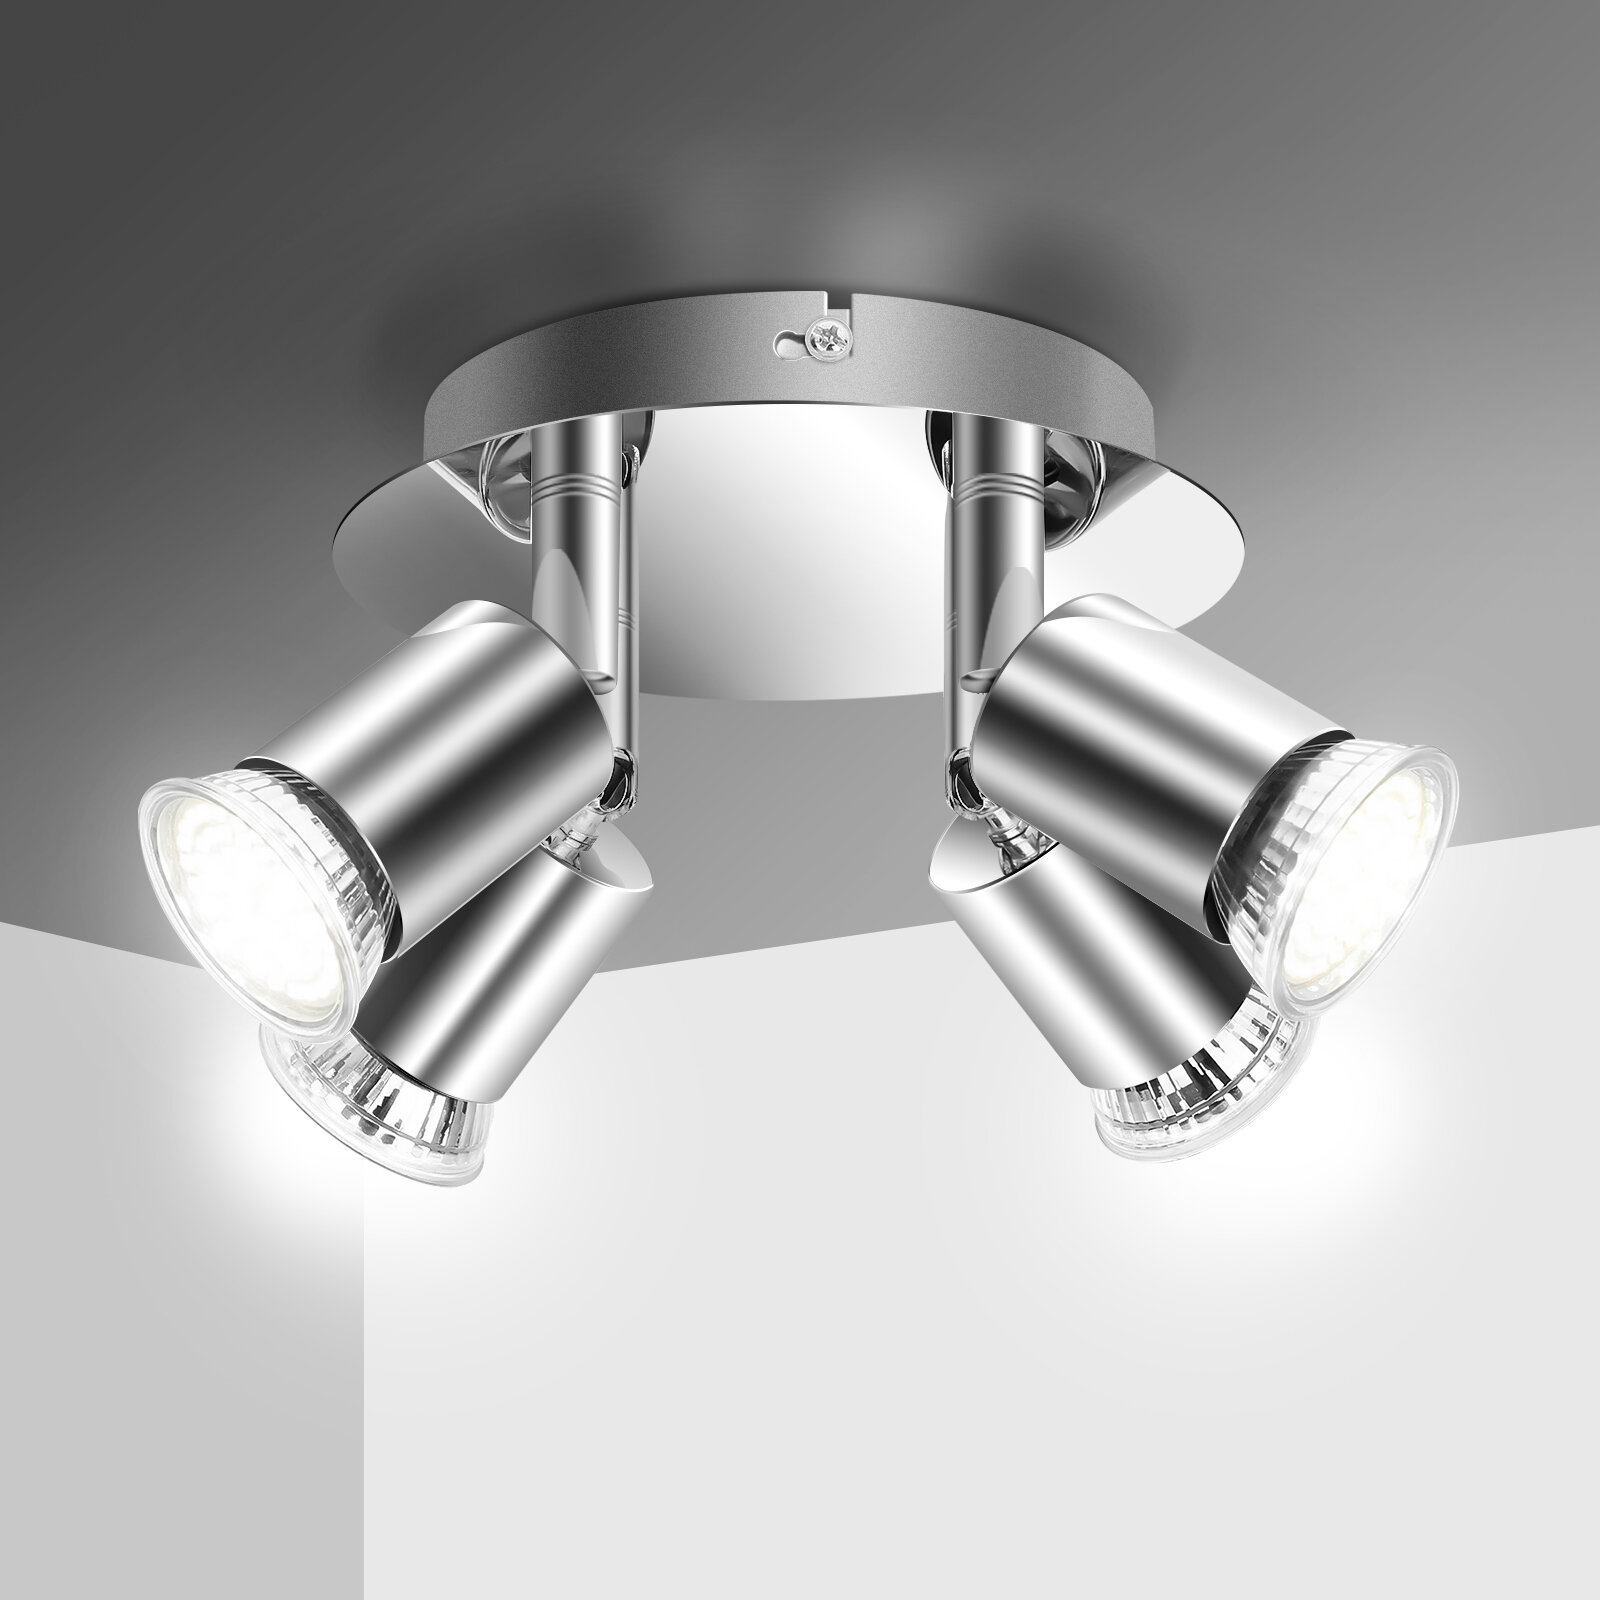 Elfeland 100-220V 4 Way GU10 LED Draaibare Plafondlamp Lamp Spotlight Fitting Home Verlichting